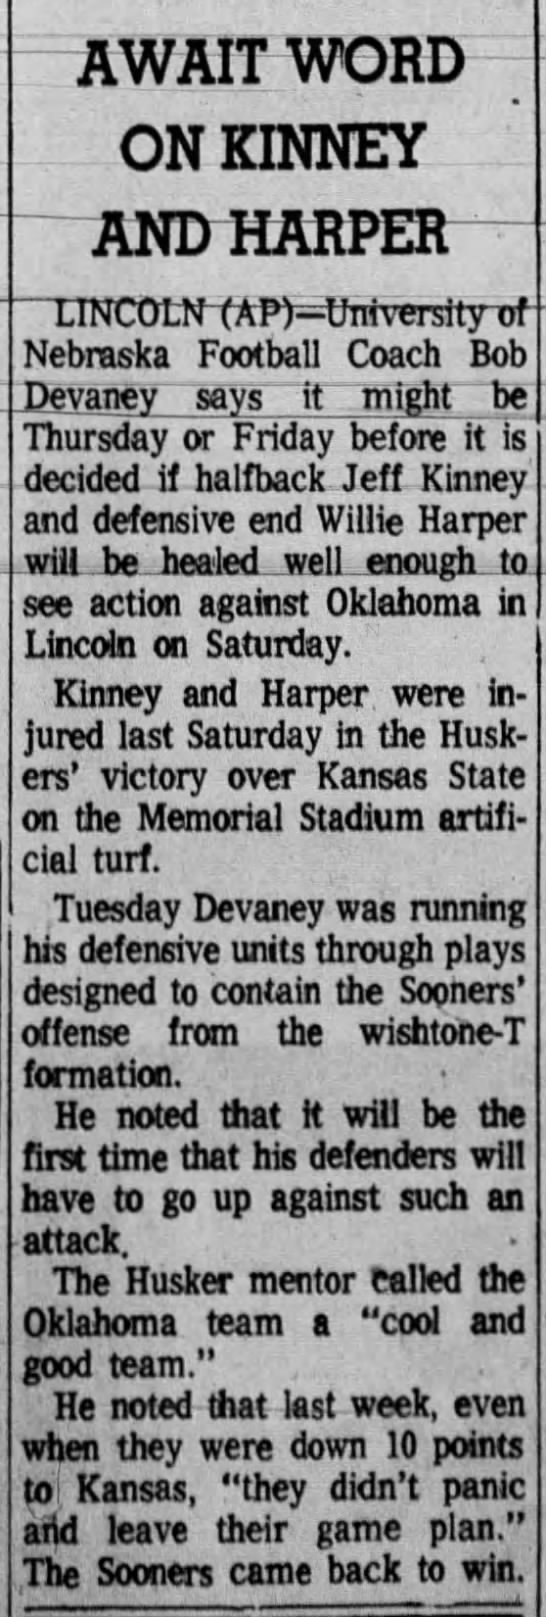 1970.11.17 Tuesday practice, Oklahoma week - 